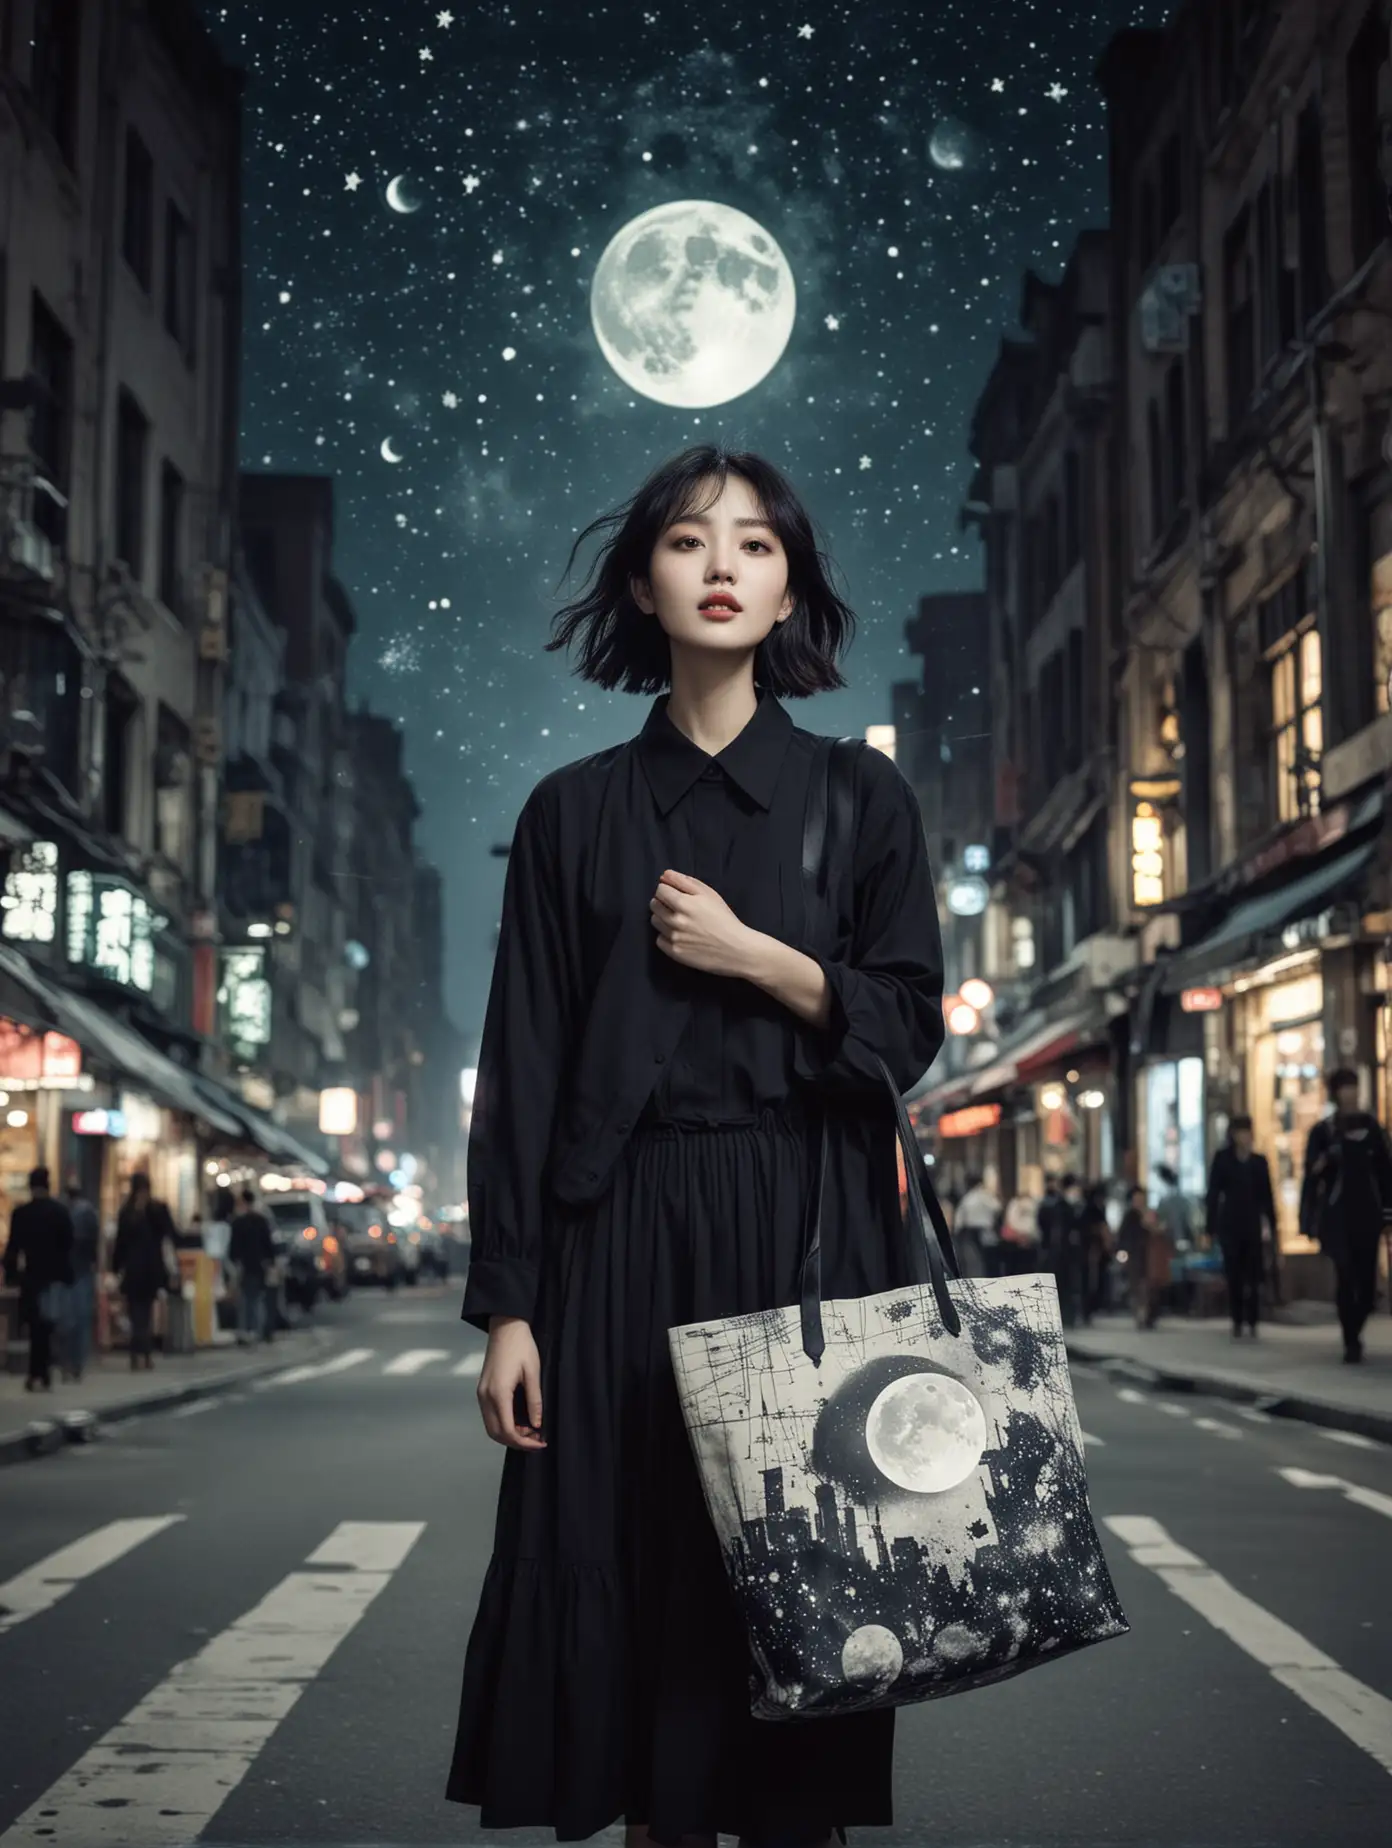 Shanghai Street Style Gao Yuanyuan with Black Shopper Bag in Dreamy LoFi